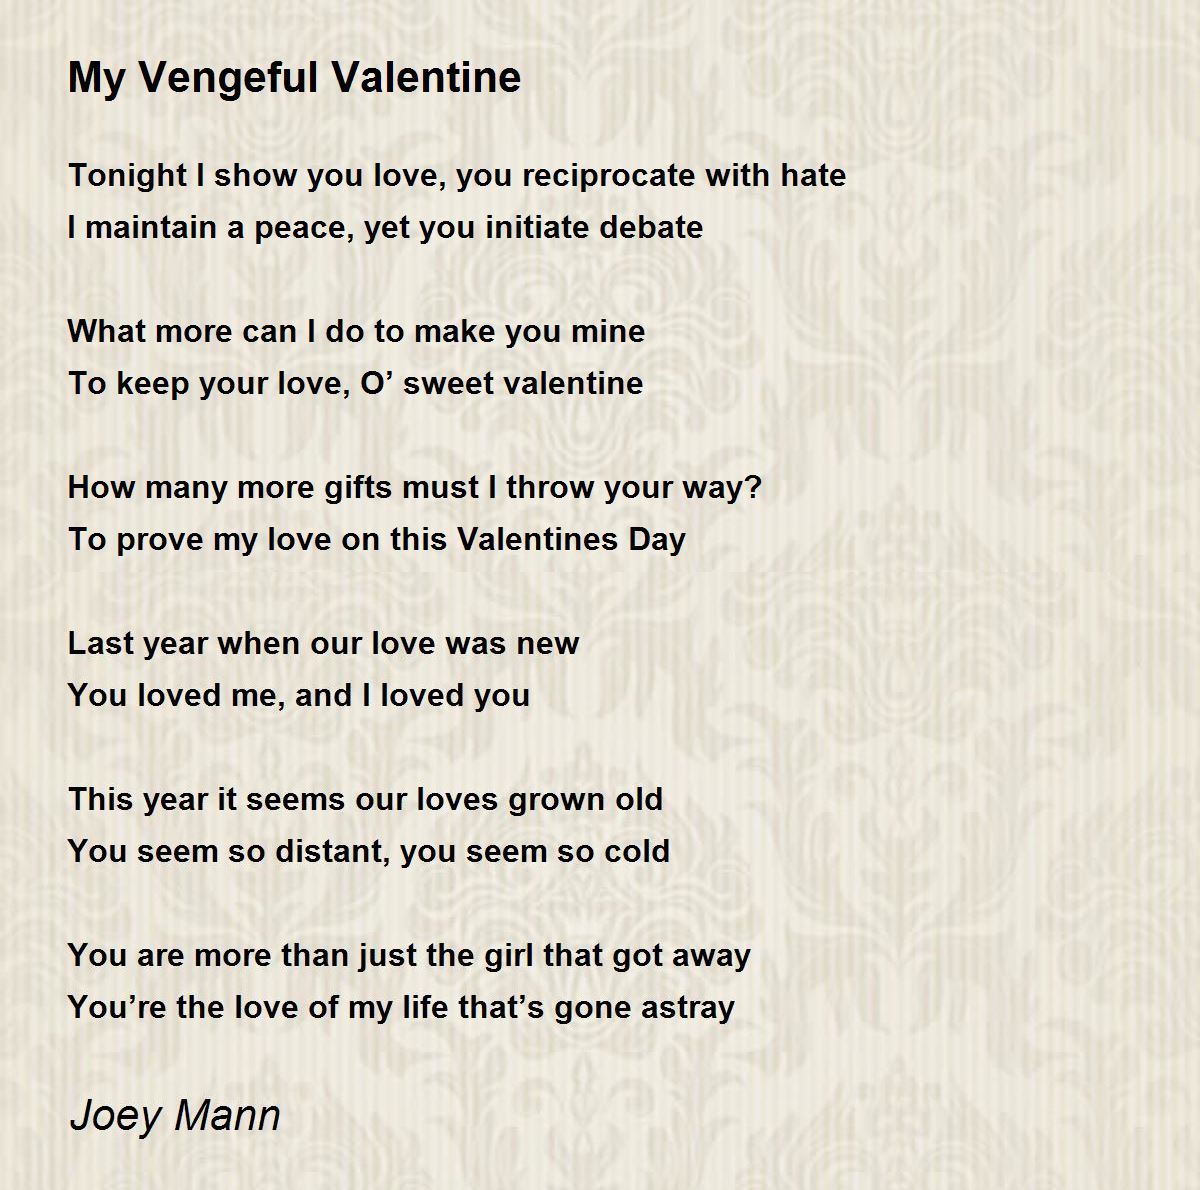 My Vengeful Valentine - My Vengeful Valentine Poem by Joey Mann